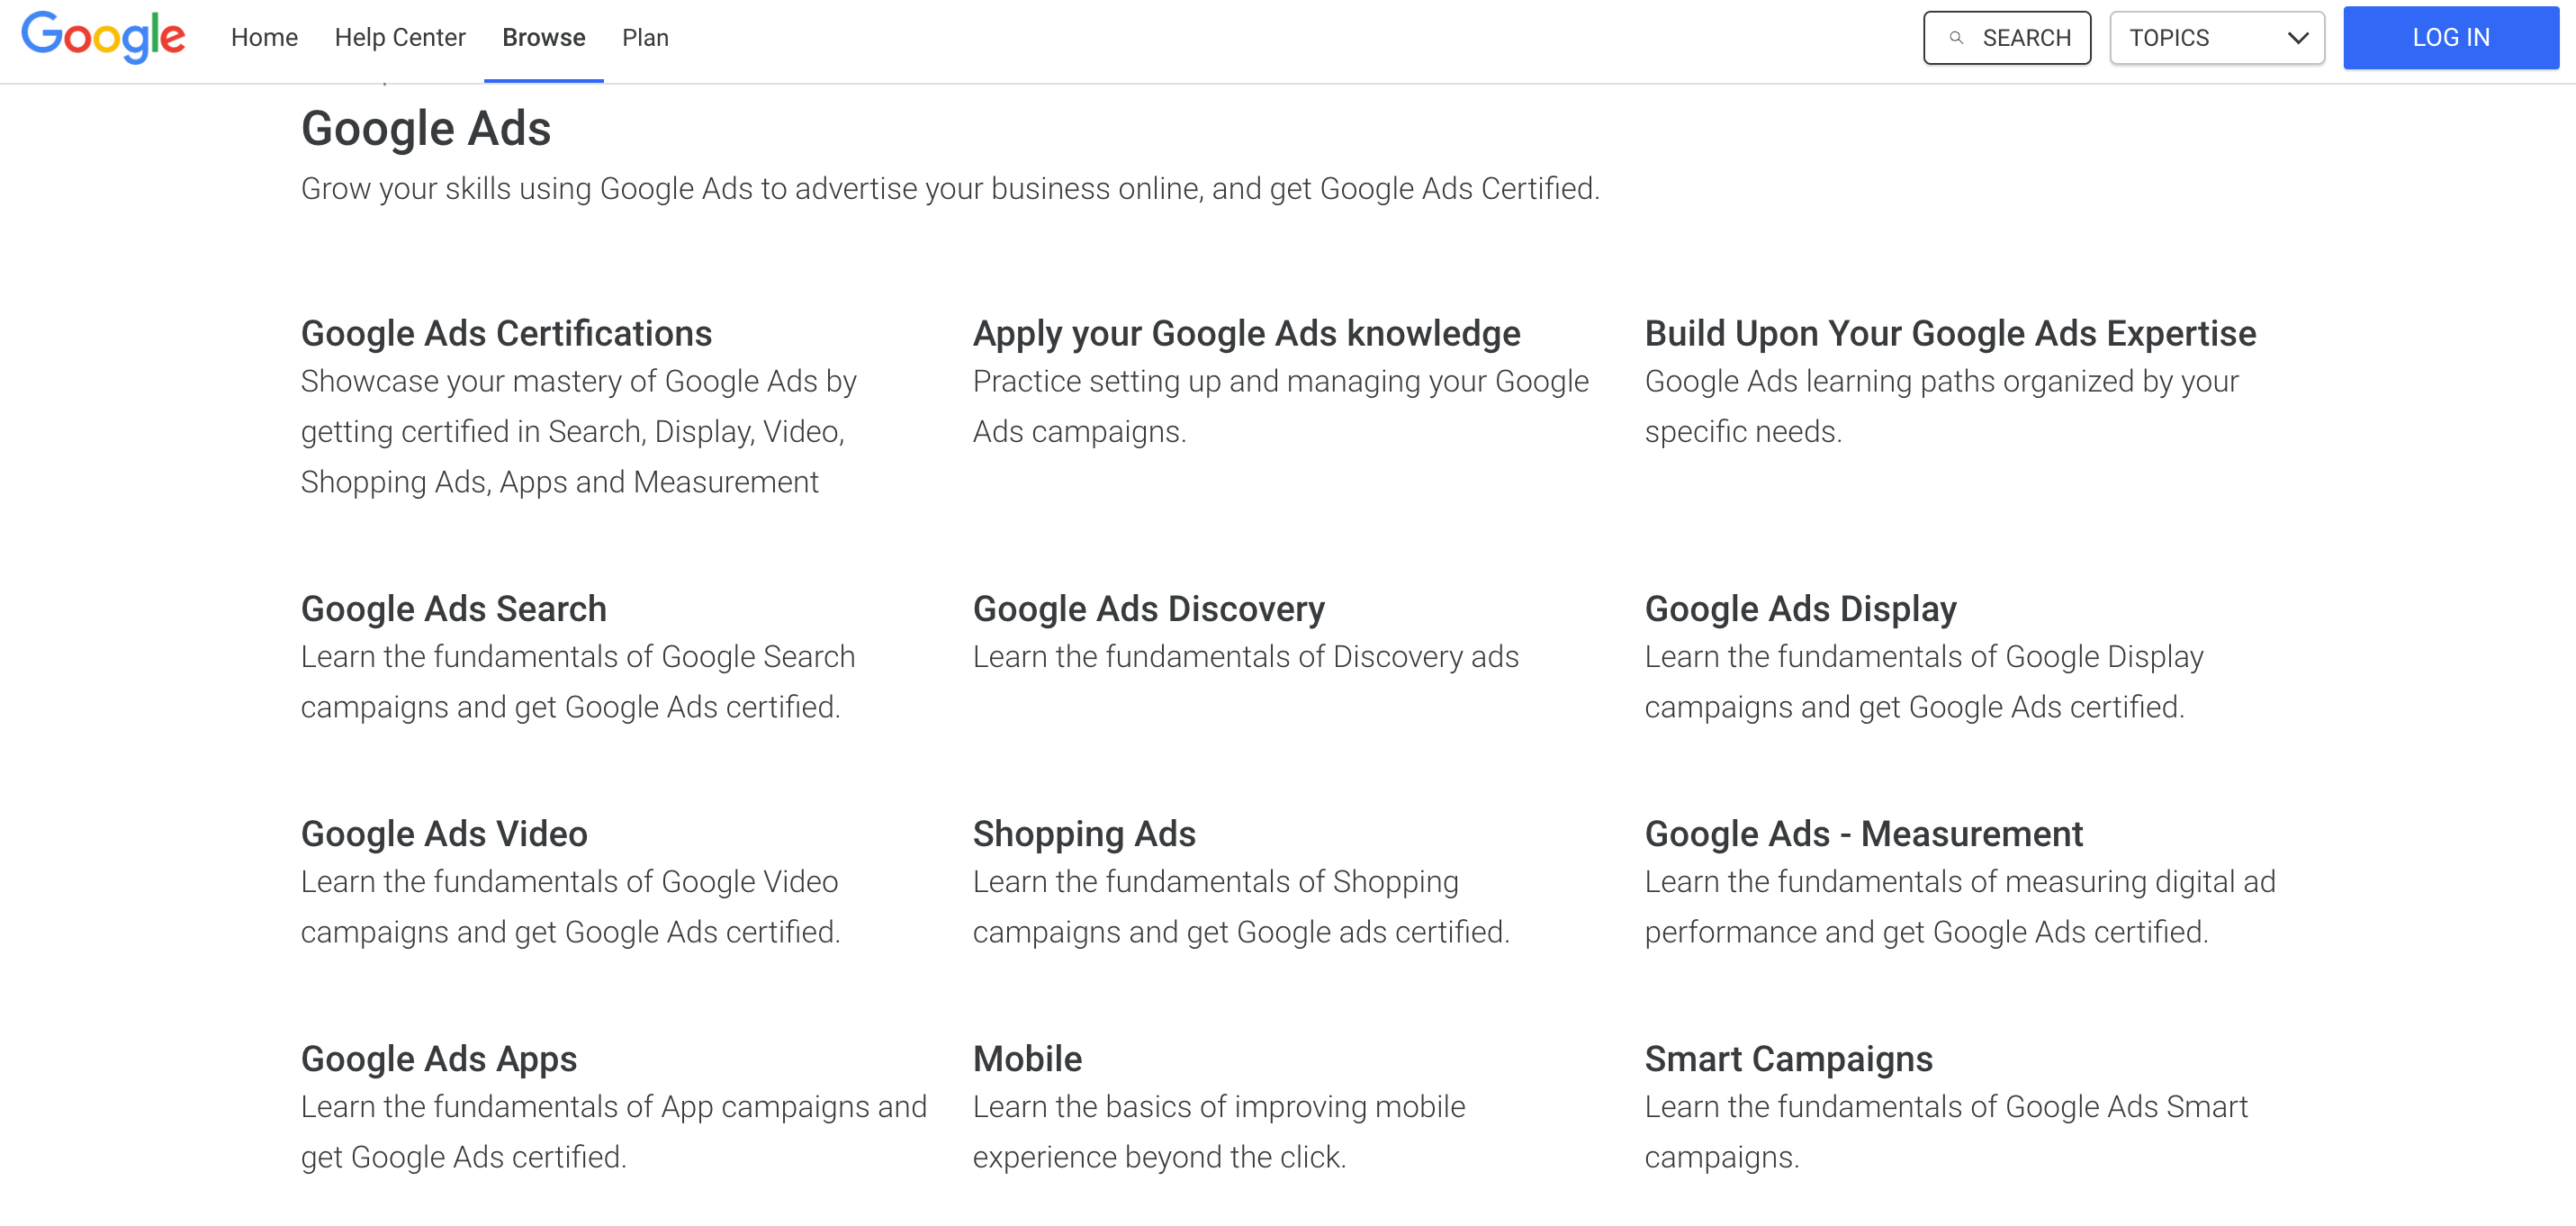 Google Ads courses